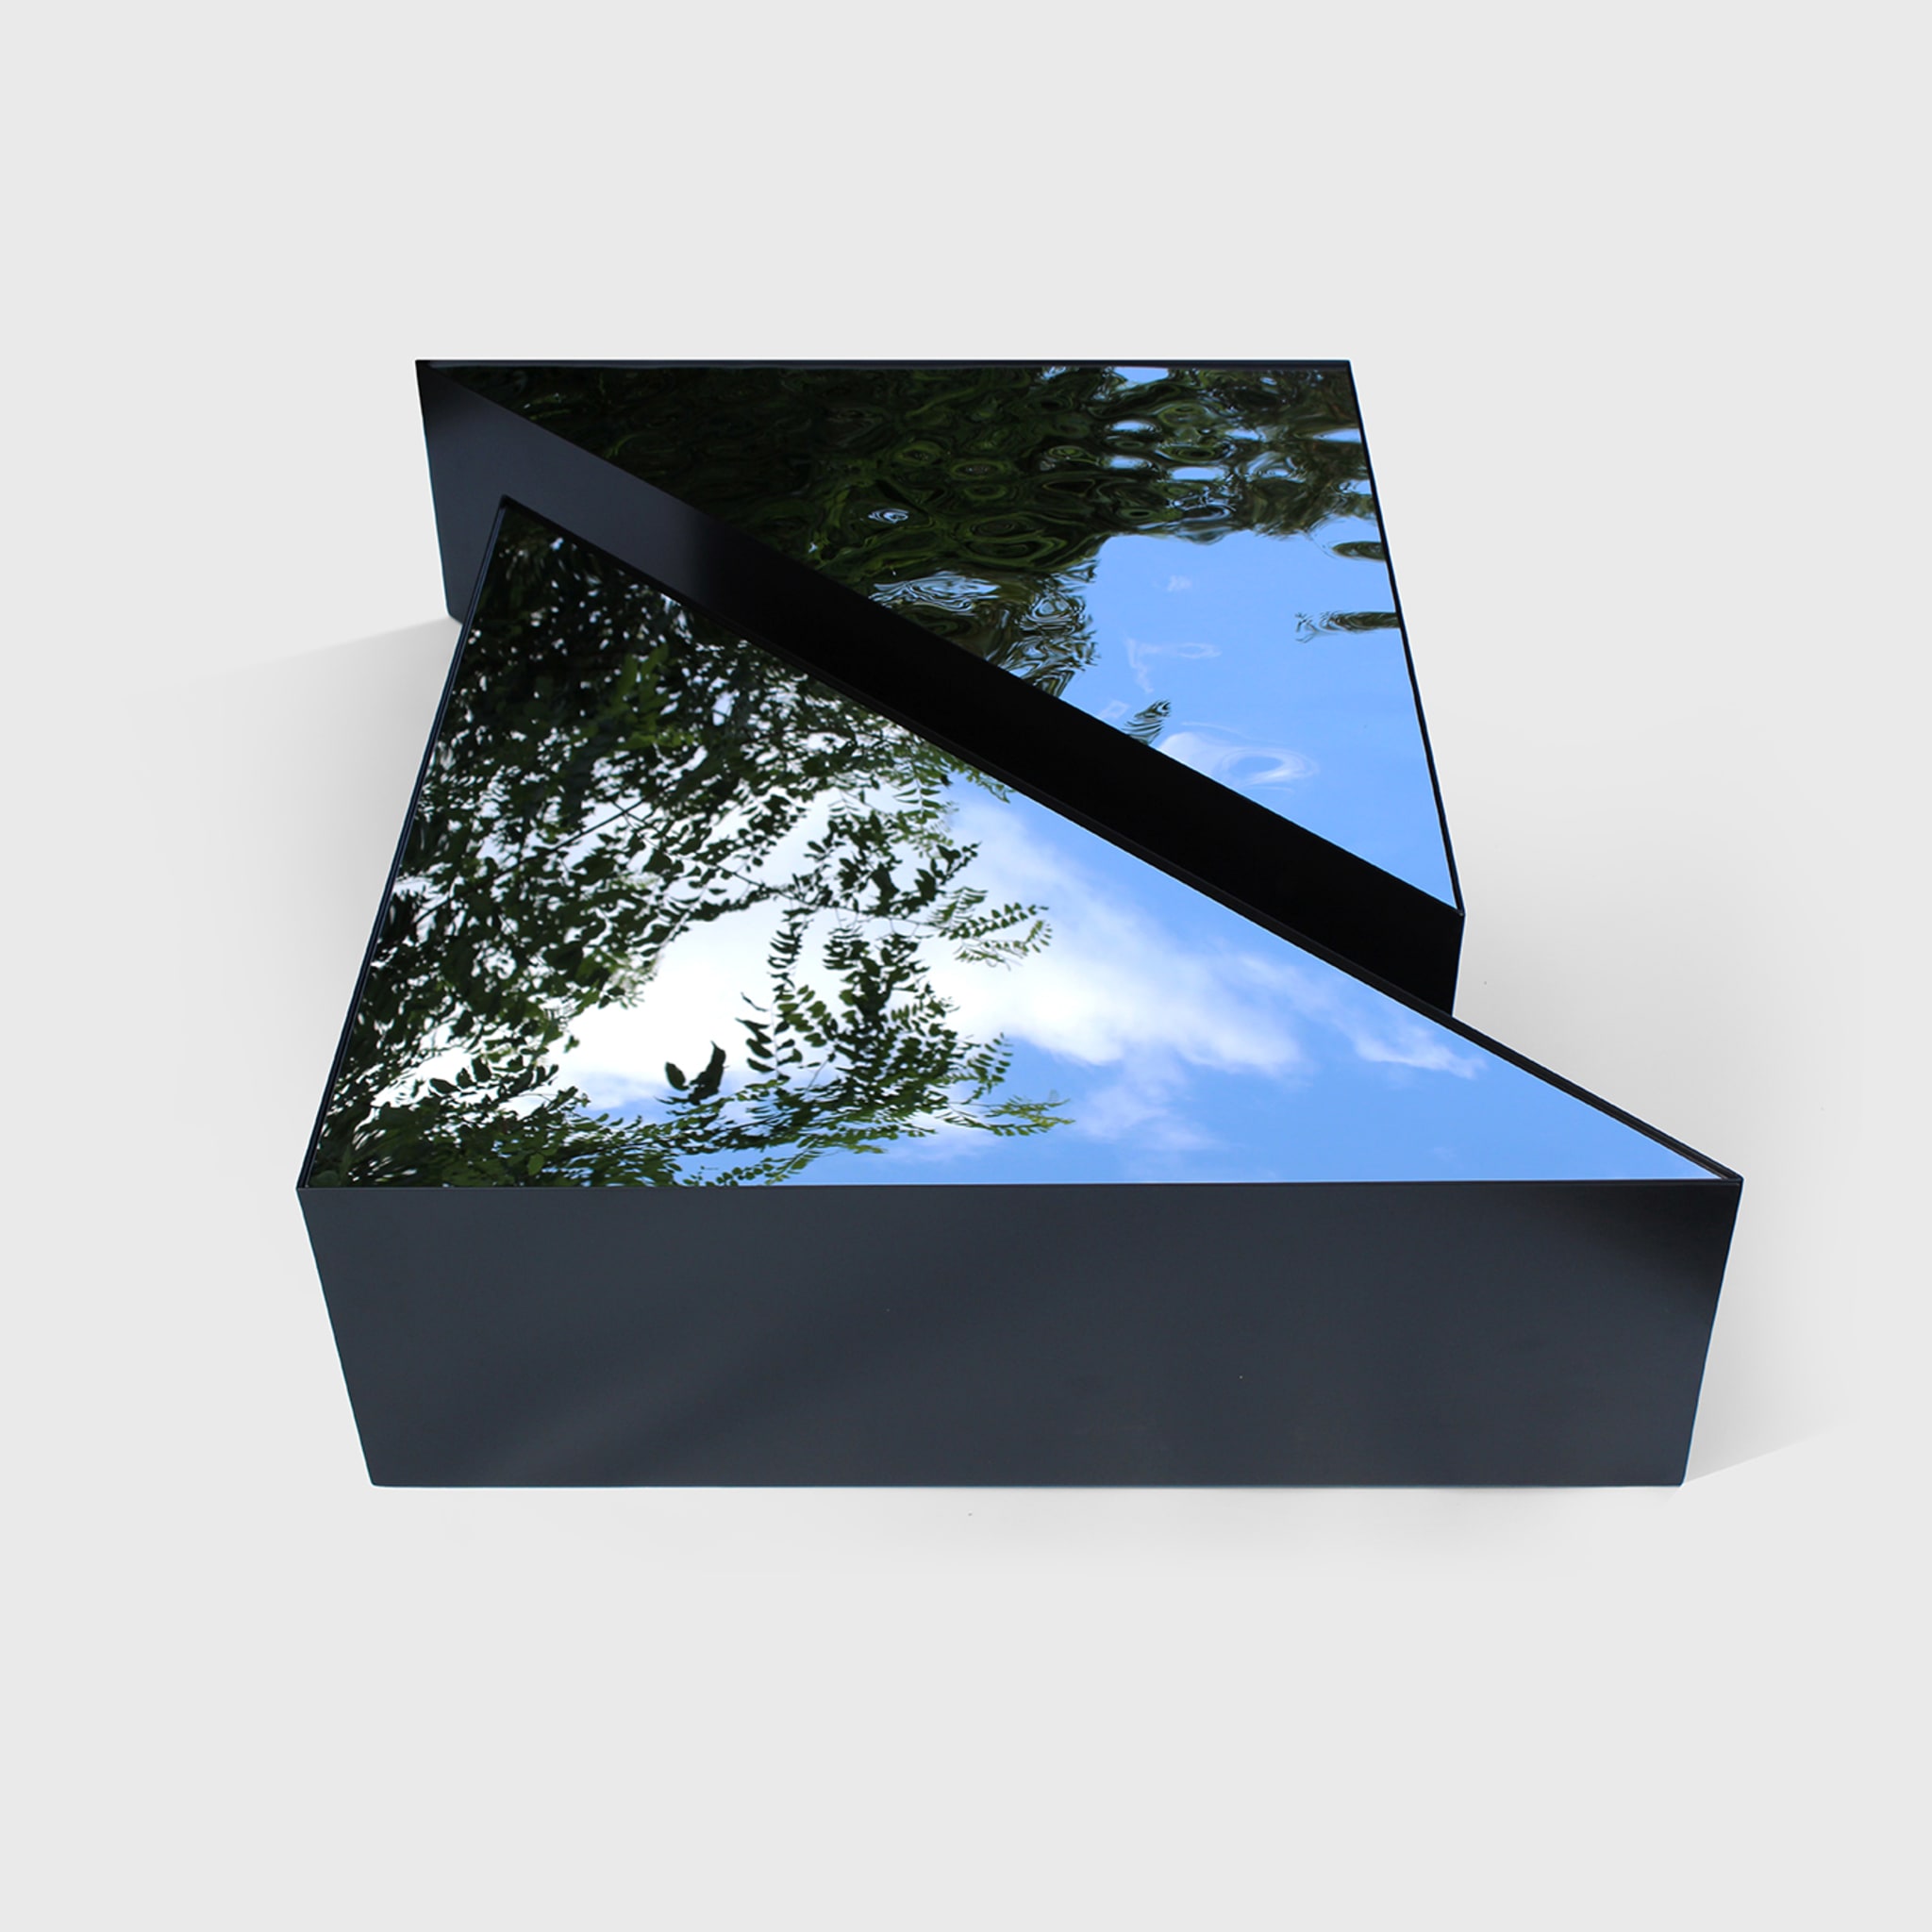 Grenen Set of 2 Triangular Black Coffee Tables - Alternative view 1